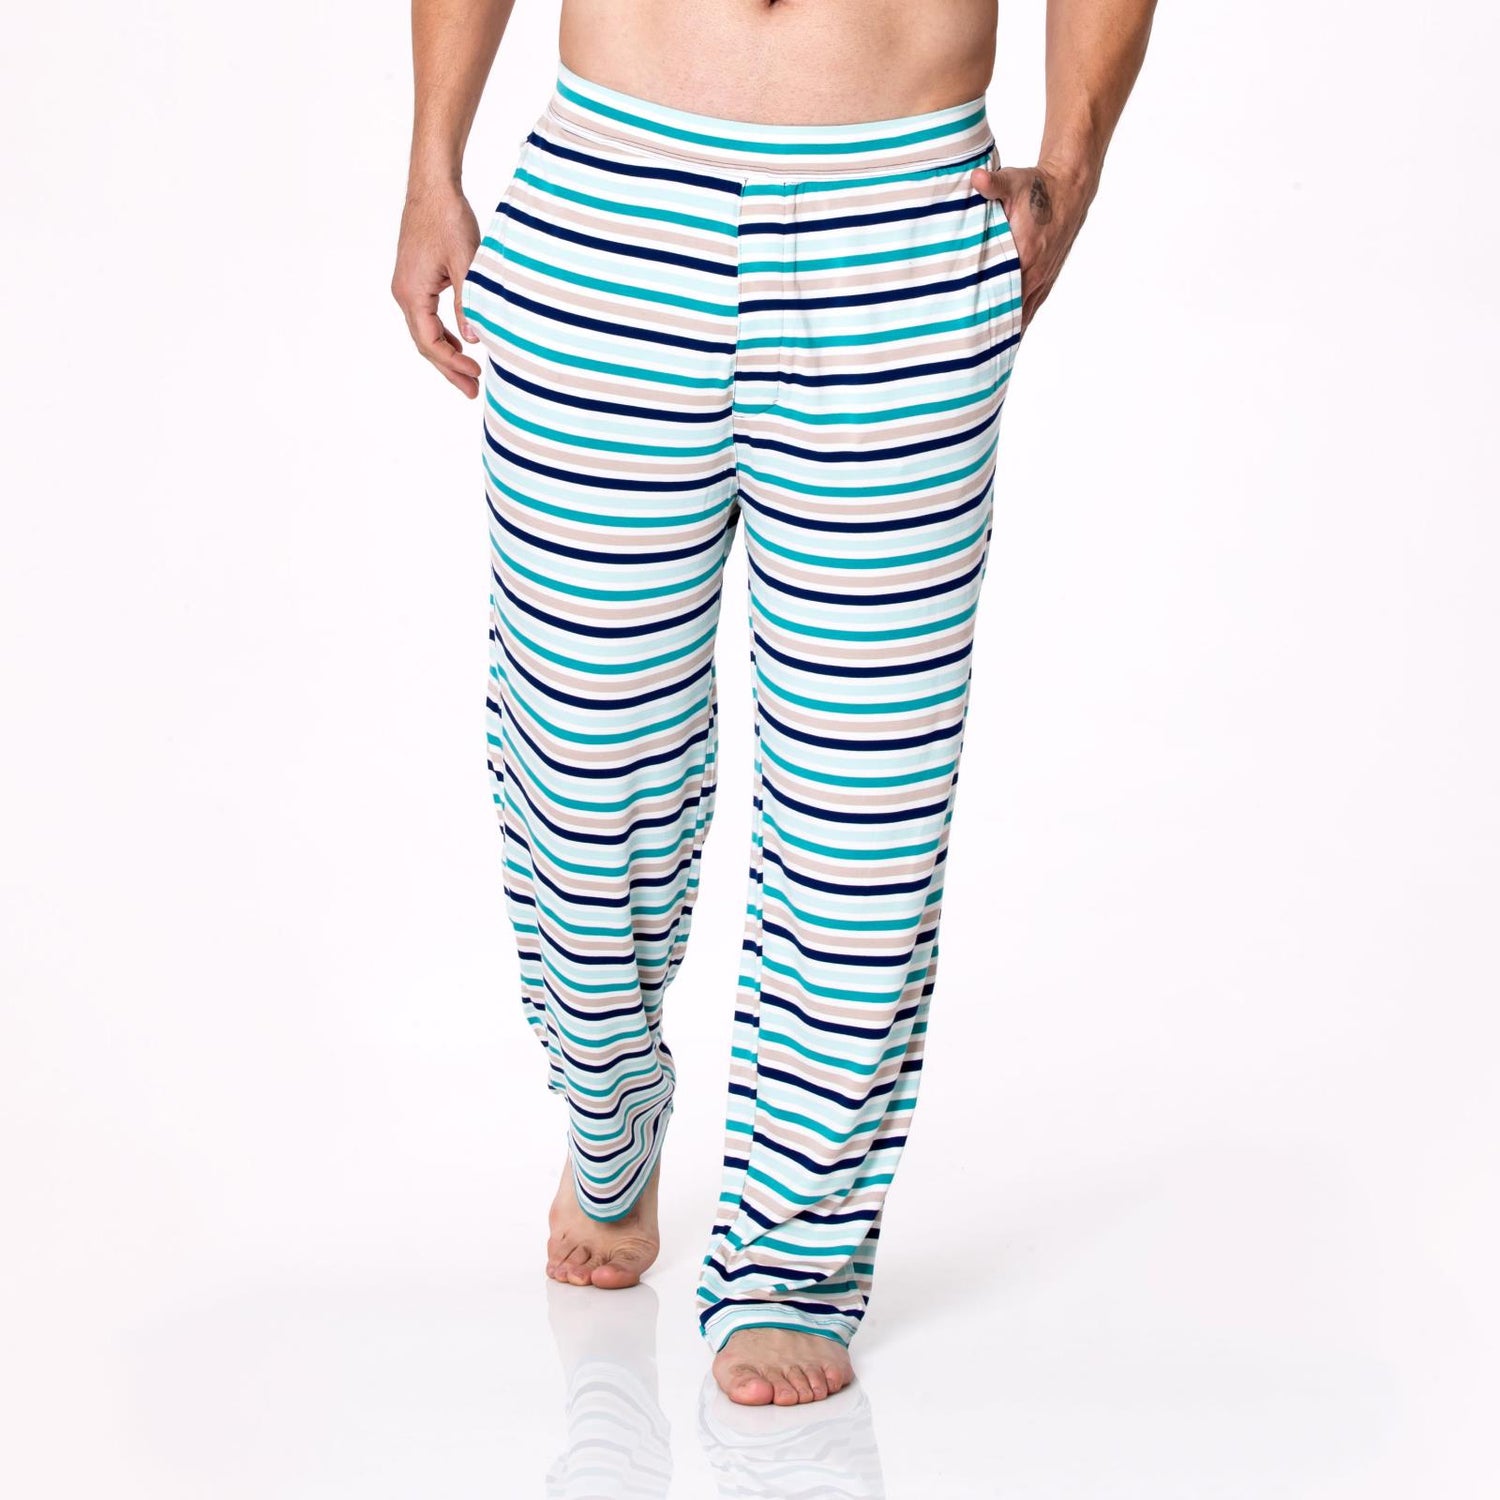 Men's Print Pajama Pants in Sand and Sea Stripe